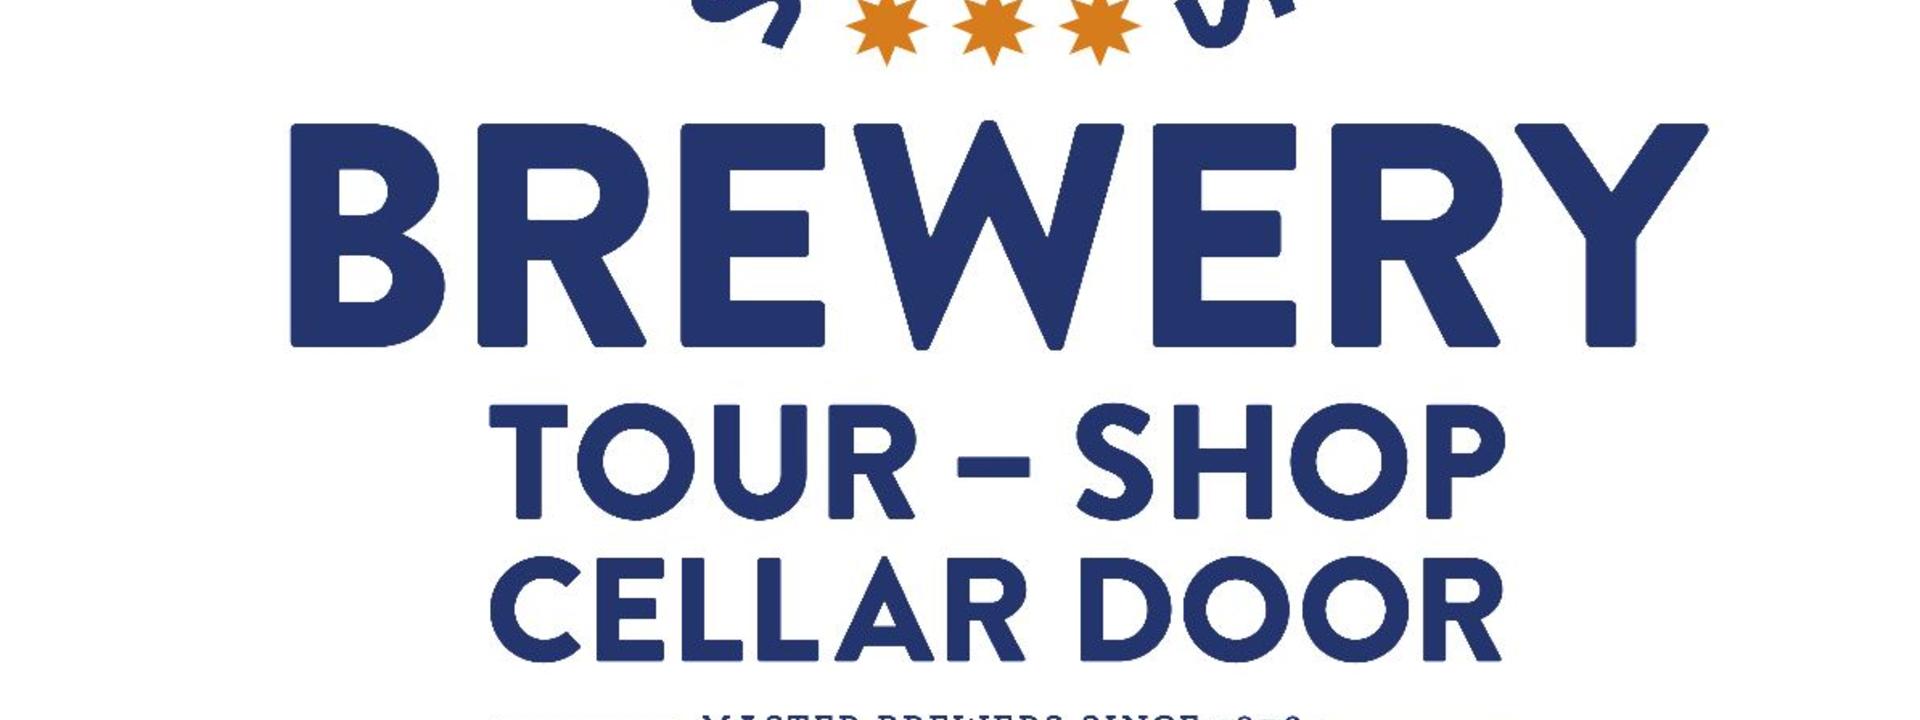 brewery-tour-logo.JPG